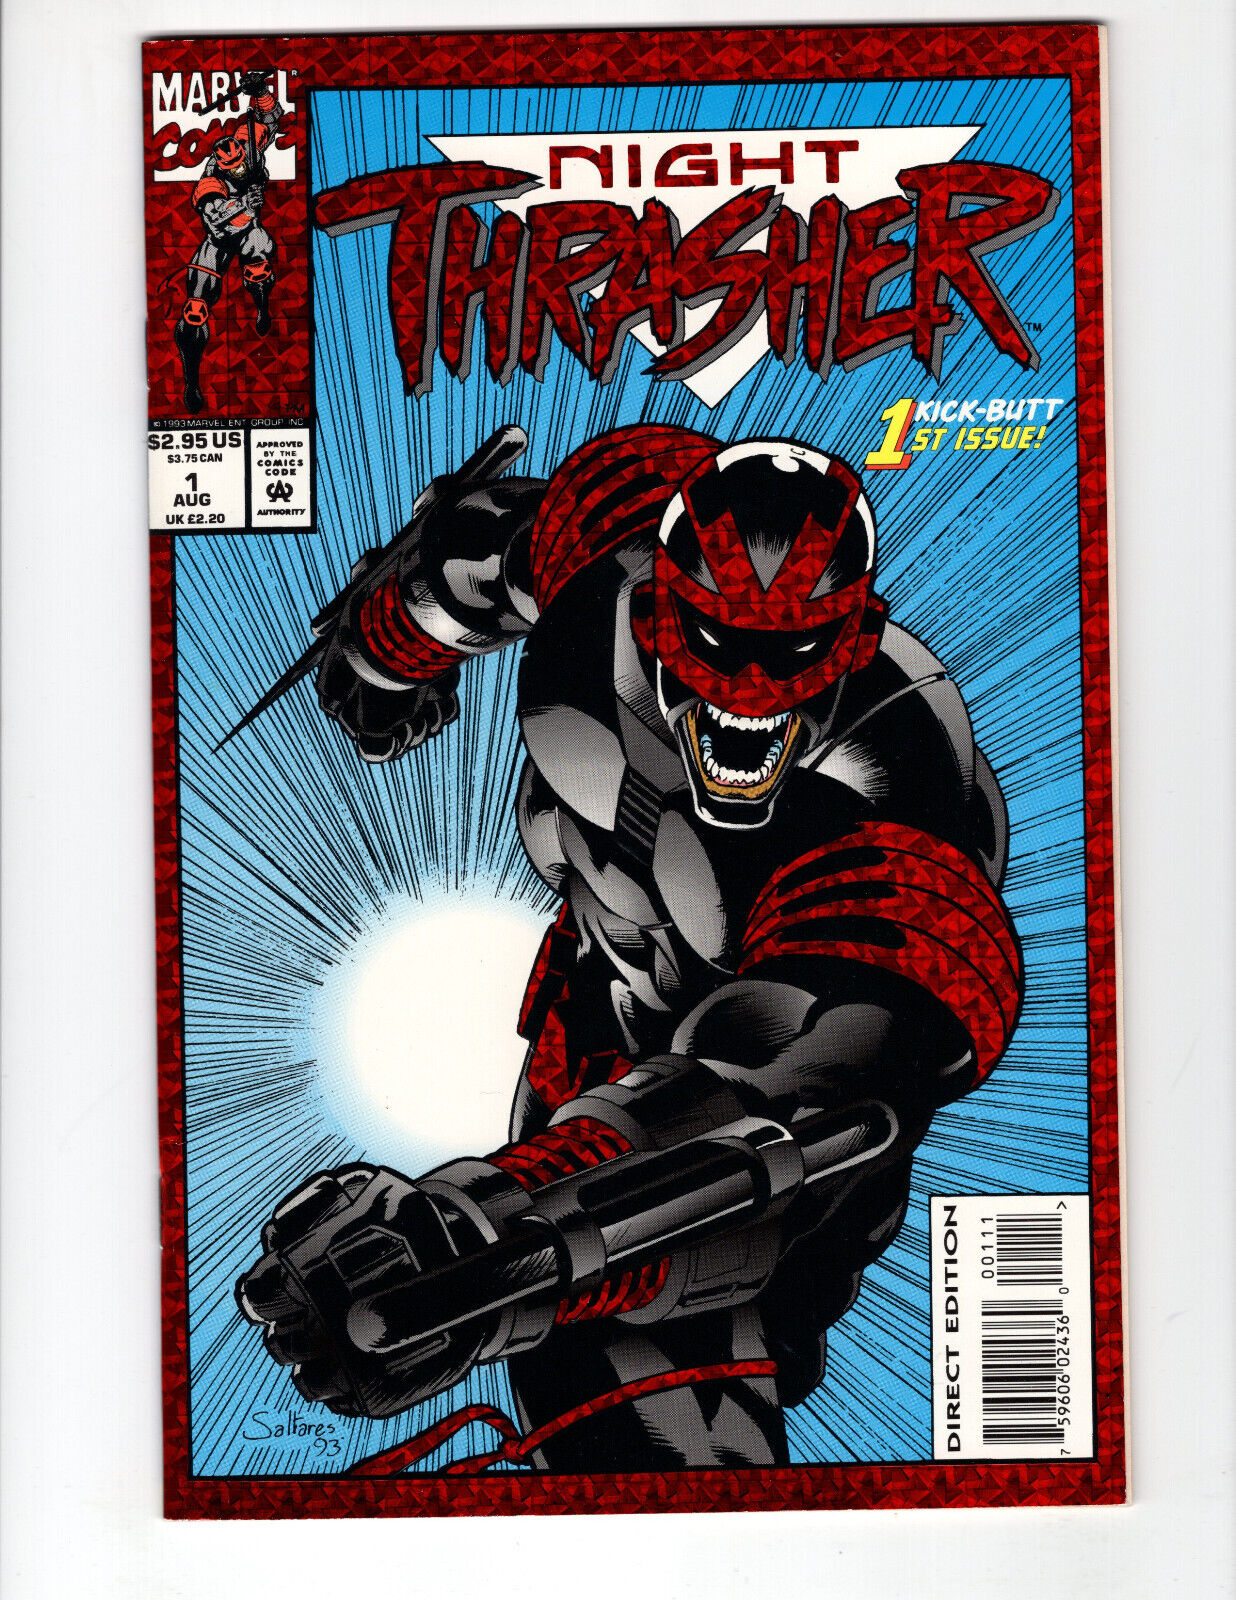 Night Thrasher #1 (Marvel Comics August 1993) - Very Fine Condition